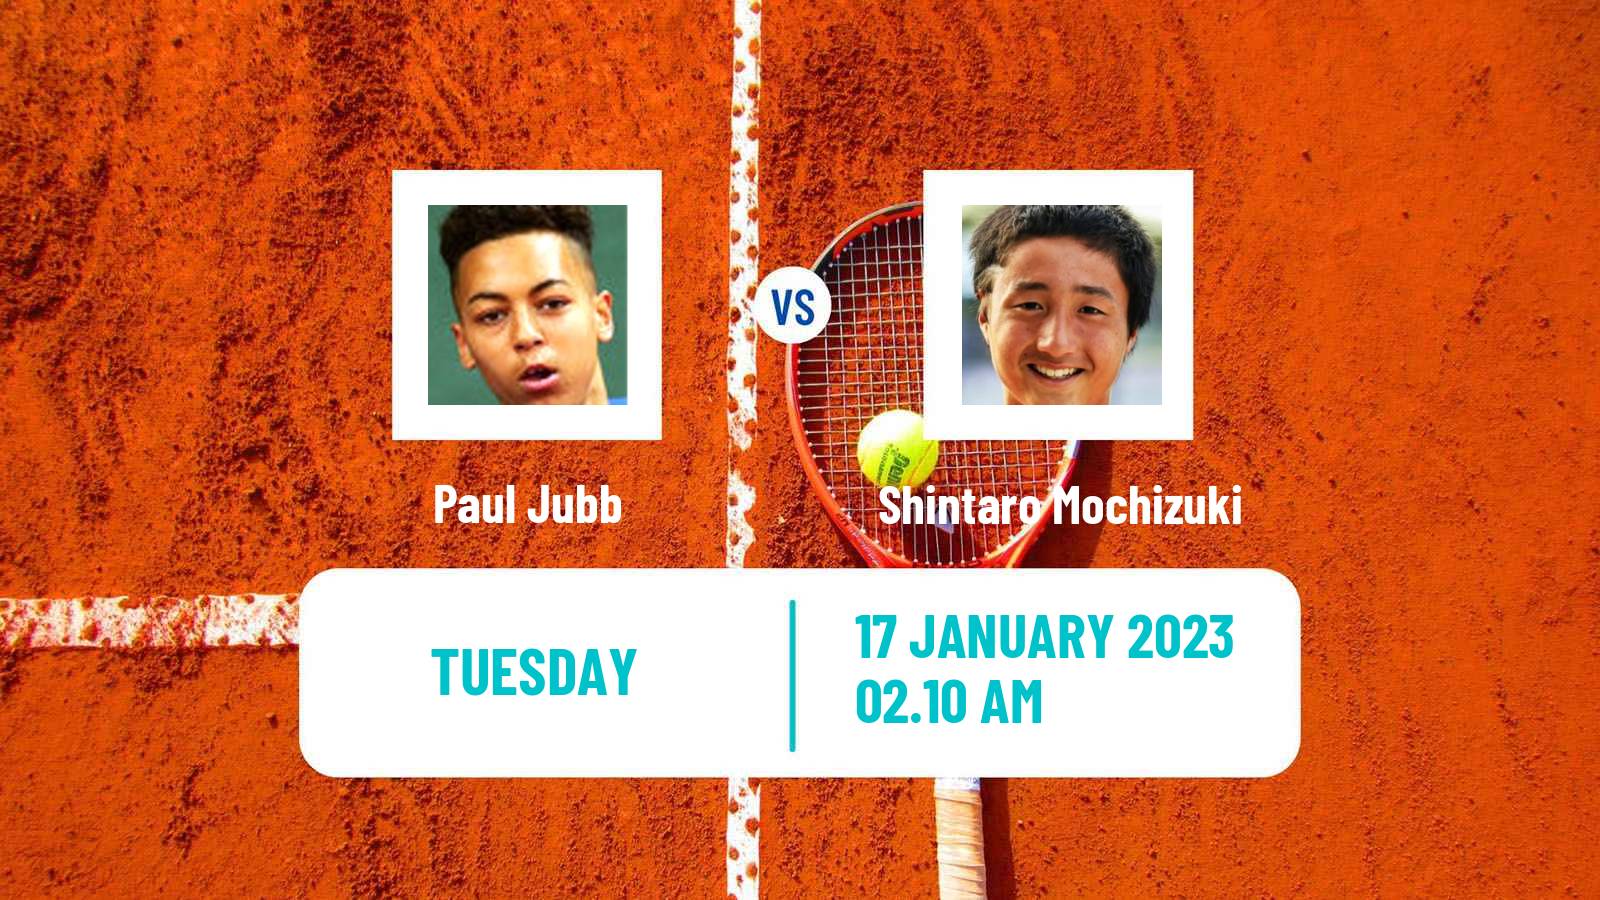 Tennis ATP Challenger Paul Jubb - Shintaro Mochizuki